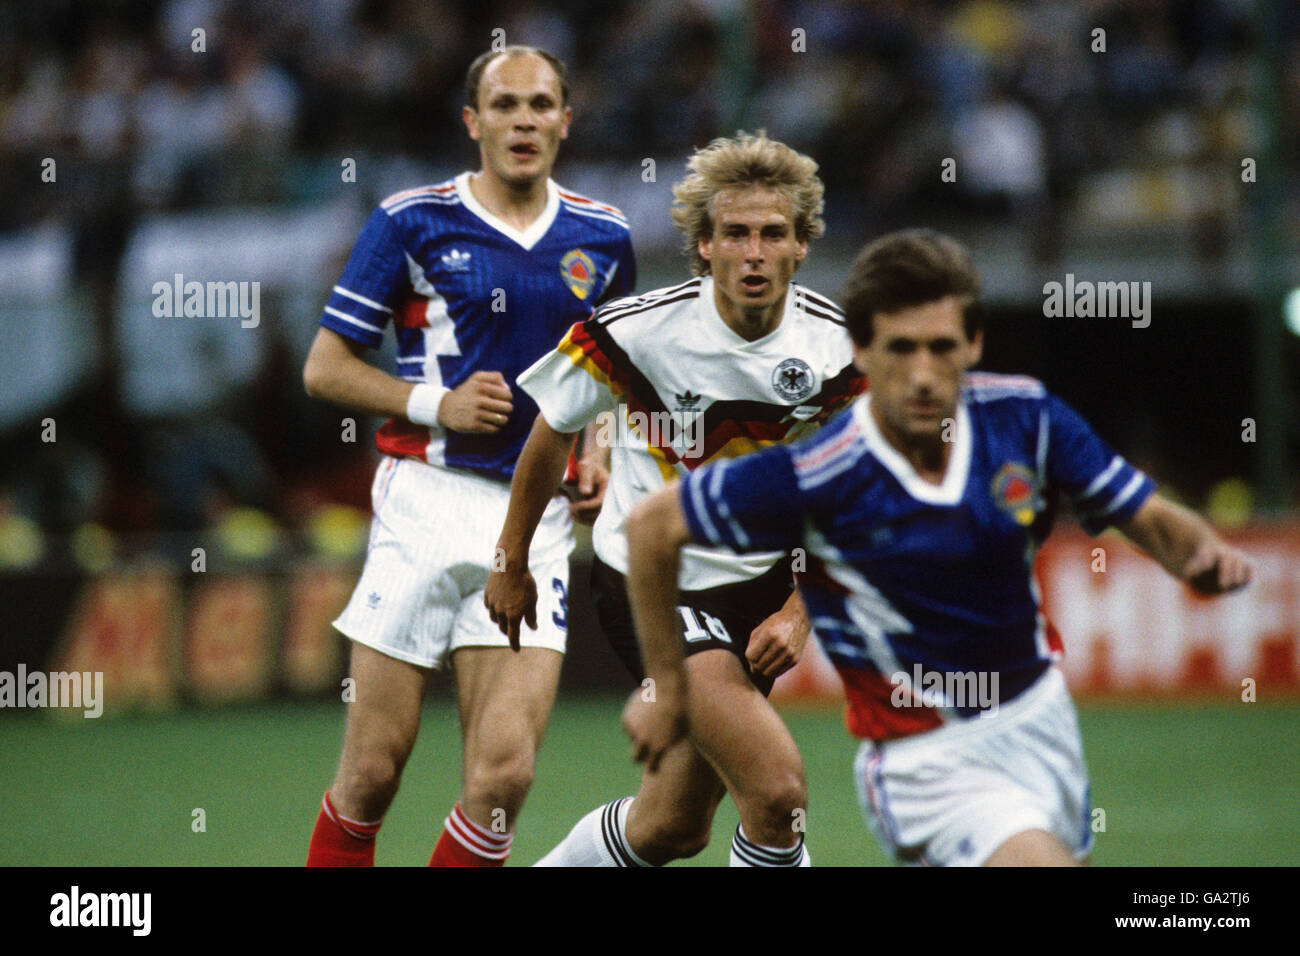 Soccer - World Cup Italia 90 - Group D - West Germany v Yugoslavia - Stadio Giuseppe Meazza, Milan. West Germany's Jurgan Klinsmann in action (c) Stock Photo